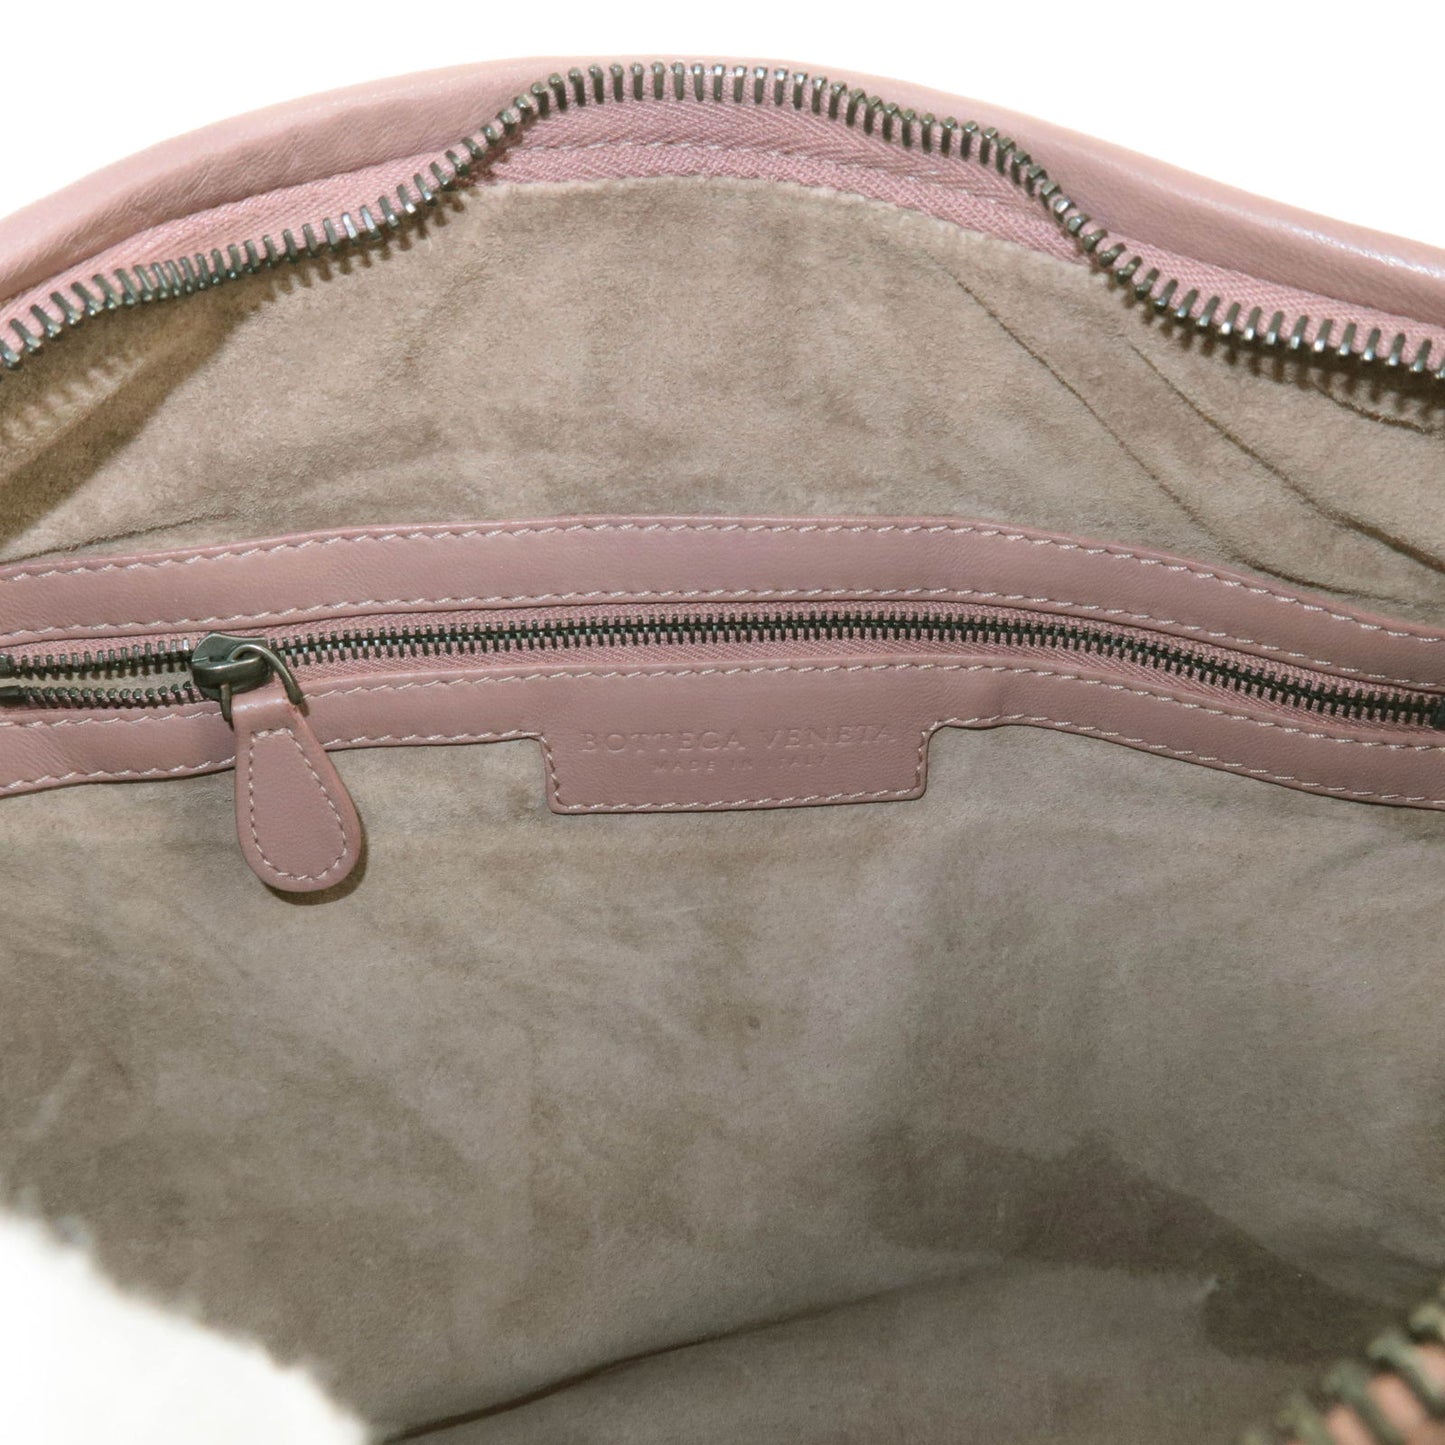 BOTTEGA VENETA Intrecciato Leather Shoulder Bag Pink 115653